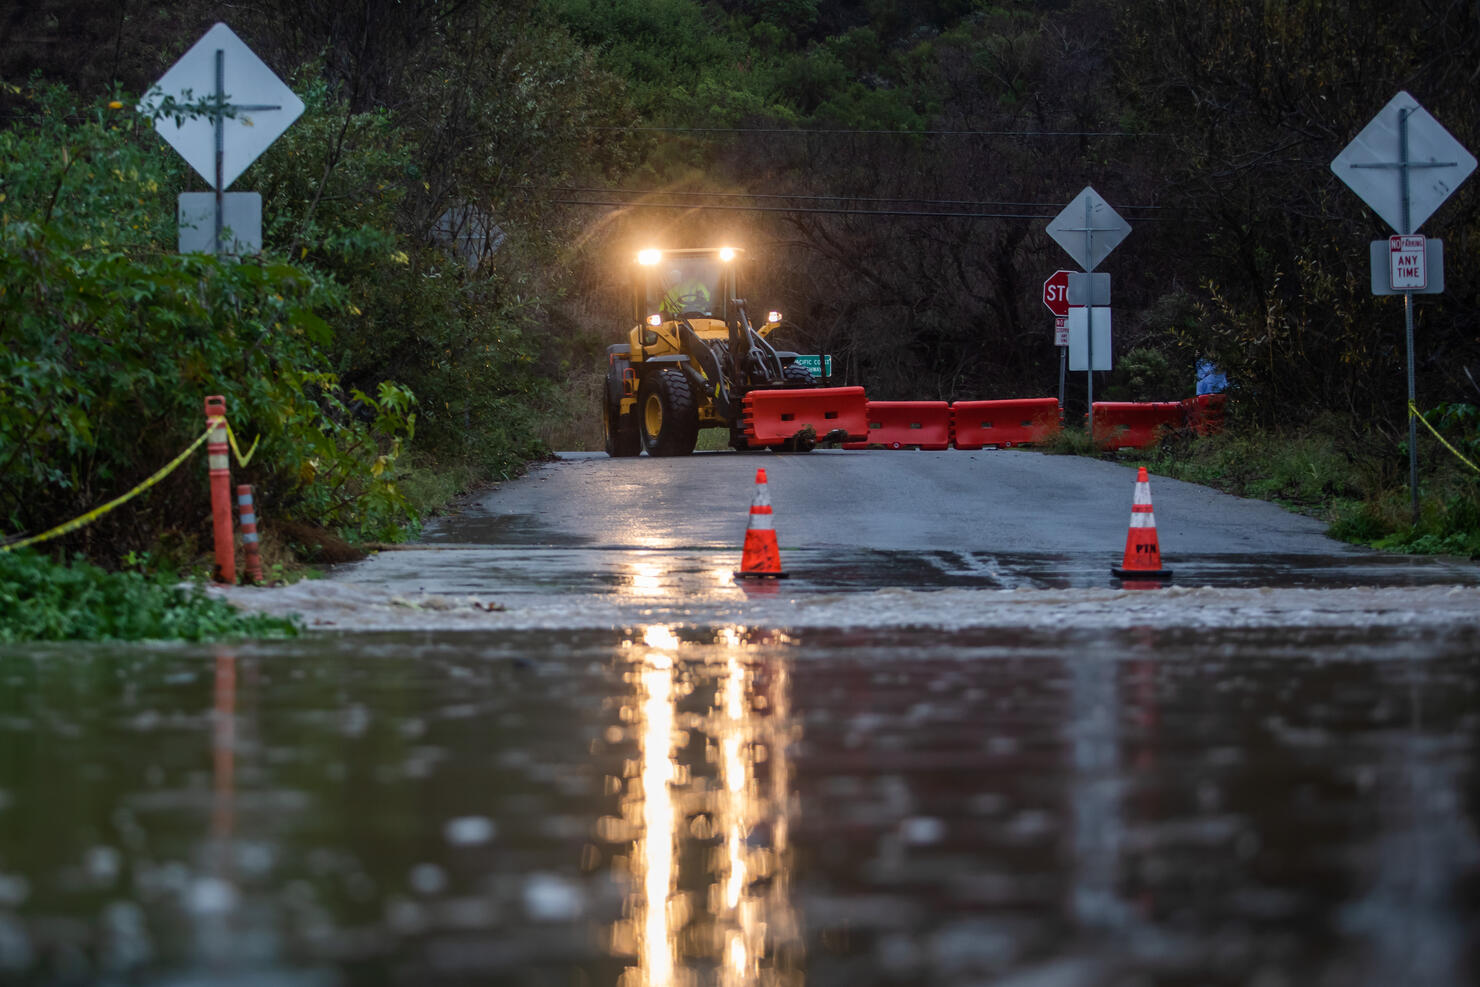 Massive Storm Brings Flooding To Ventura County, California